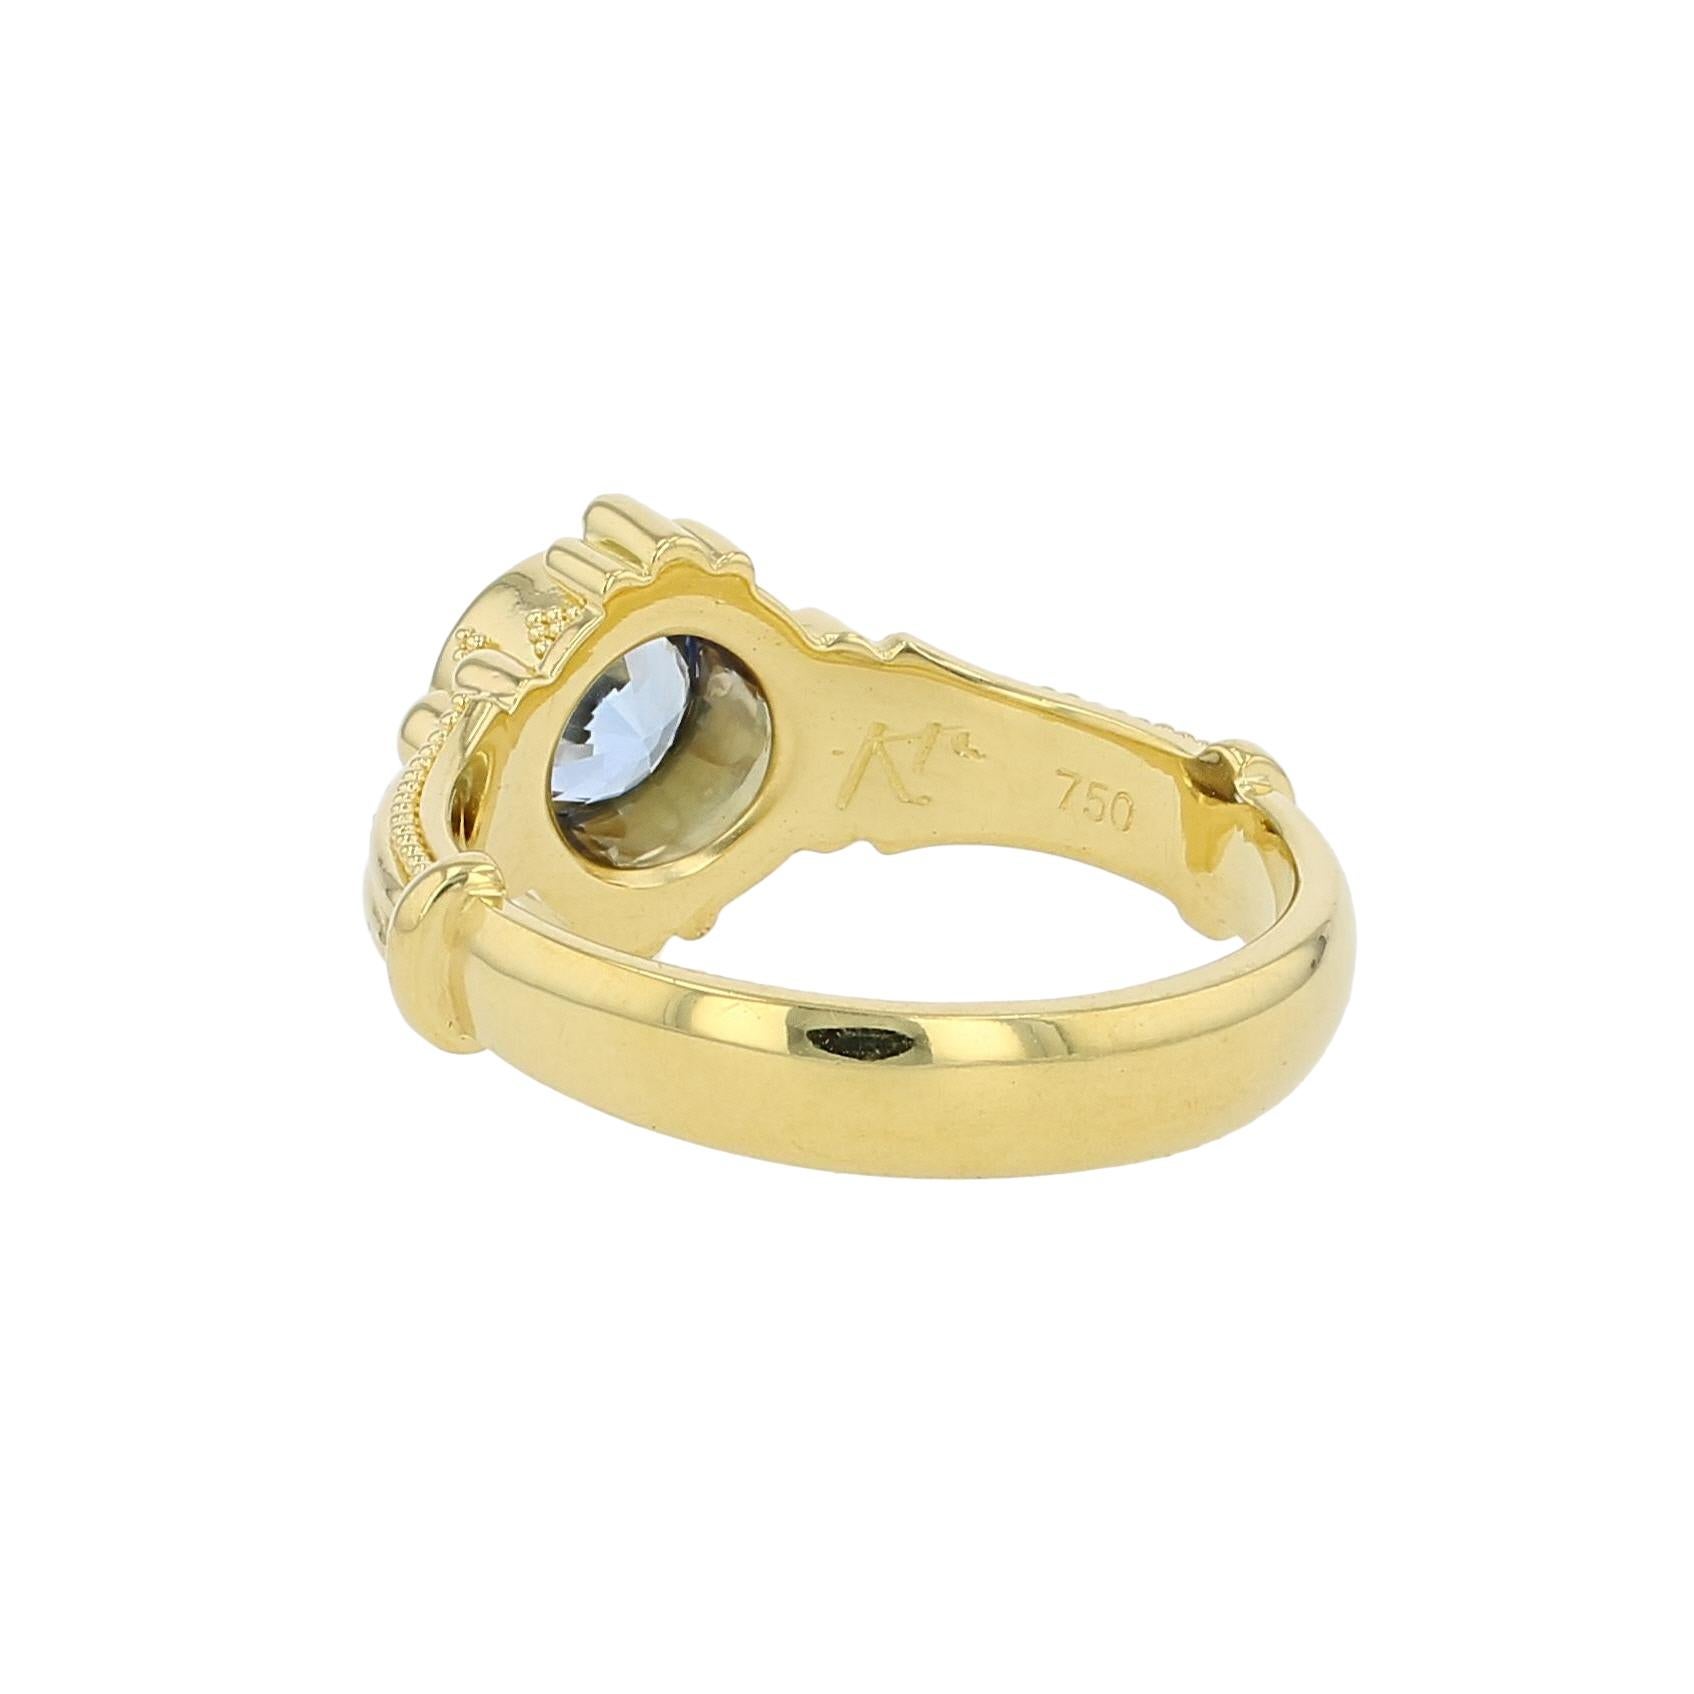 Women's or Men's Kent Raible 18 Karat Gold Solitare Ring with Natural Blue Sapphire, Granulation